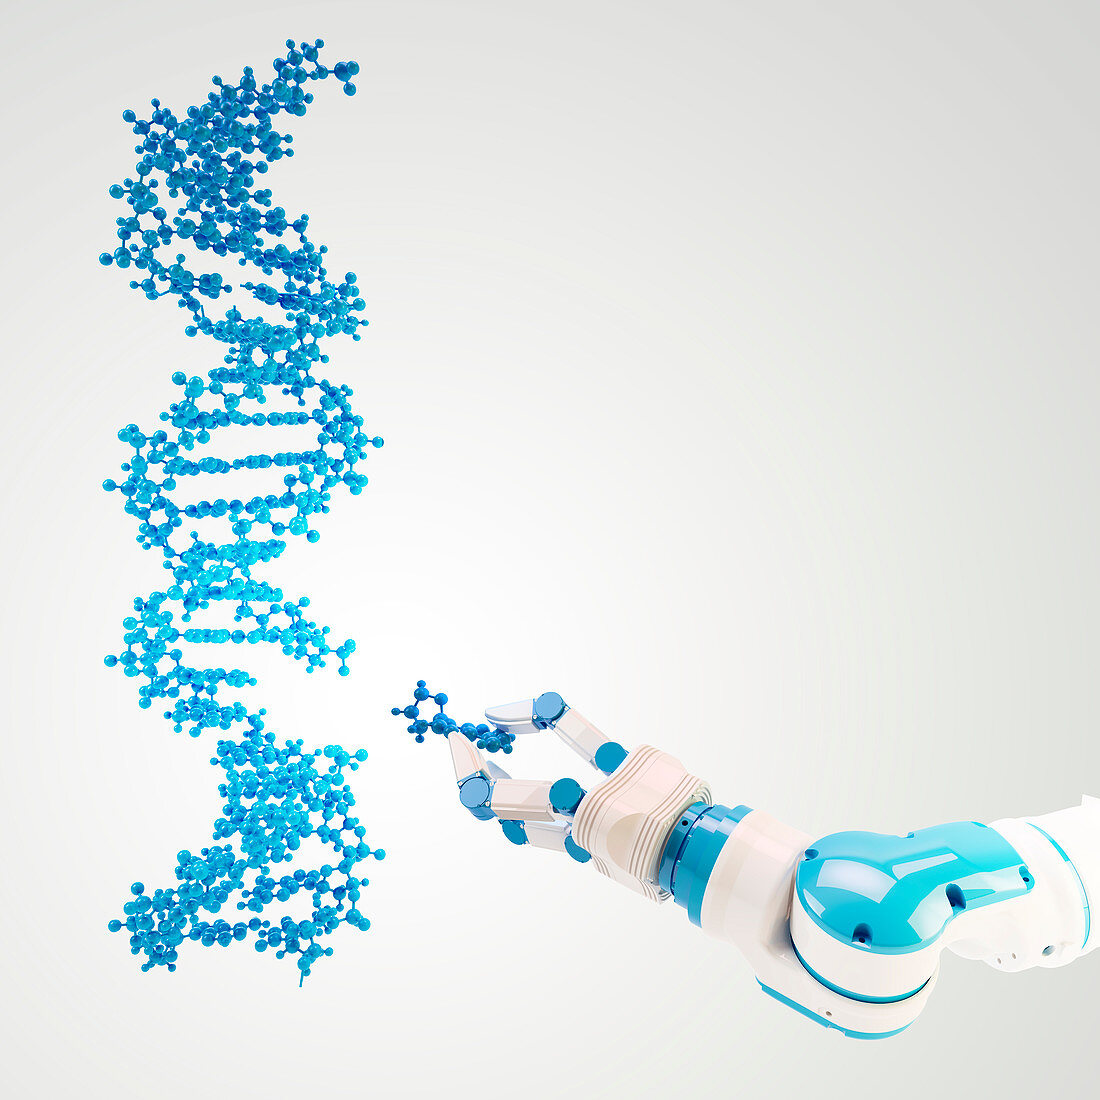 The future of genetics,illustration